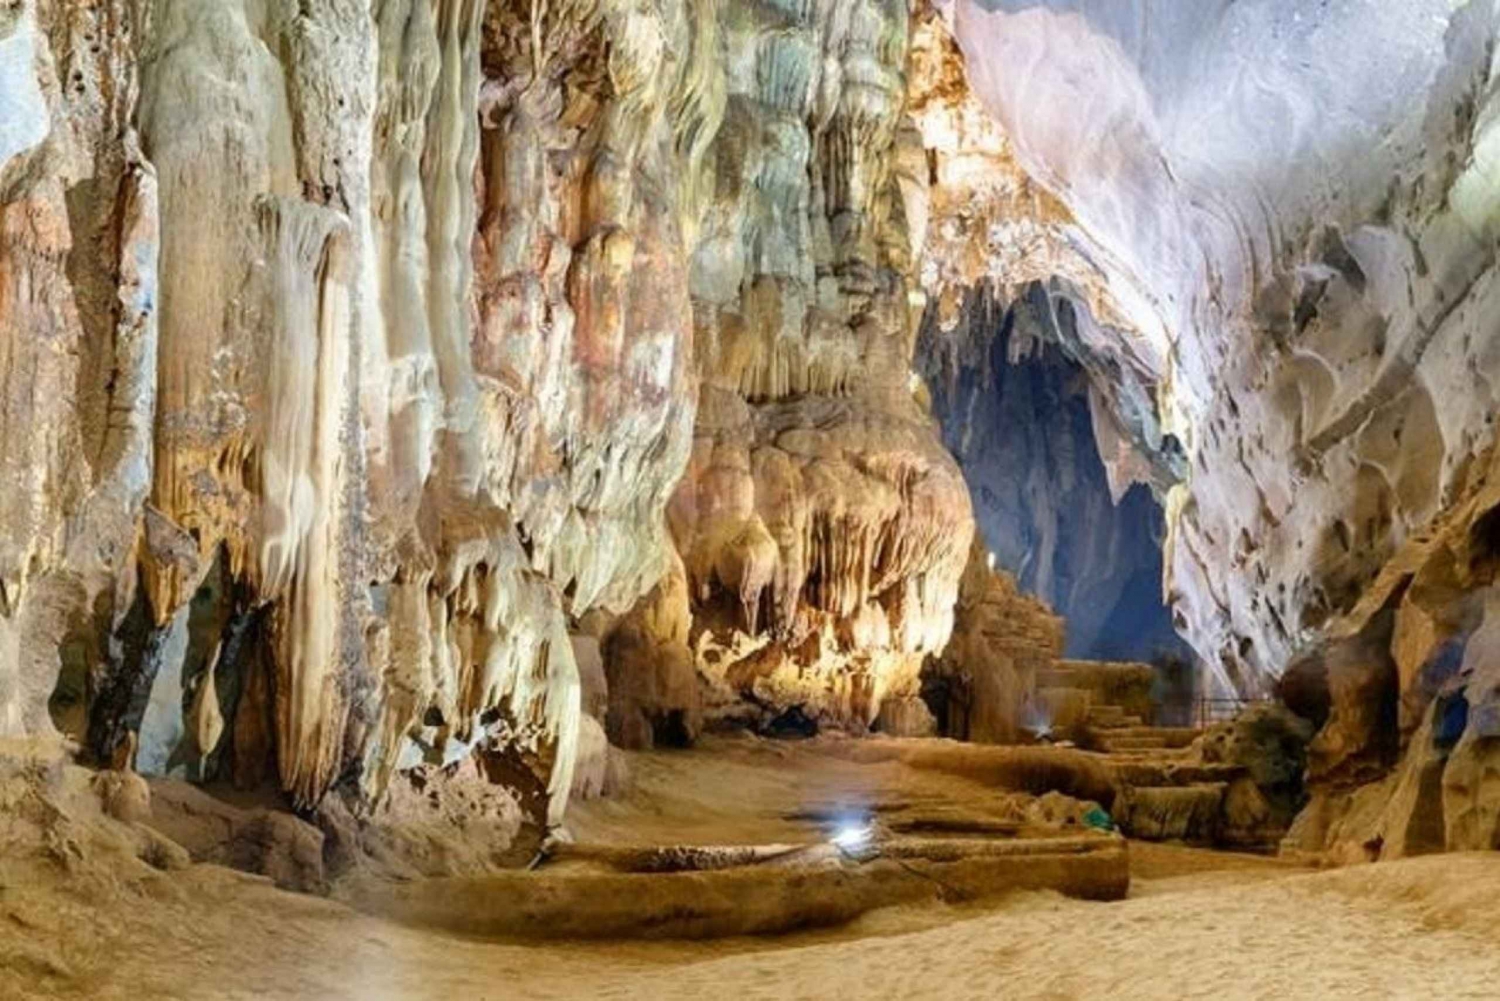 Dong Hoi / Phong Nha : Dagstur till paradiset och grottorna i Phong Nha